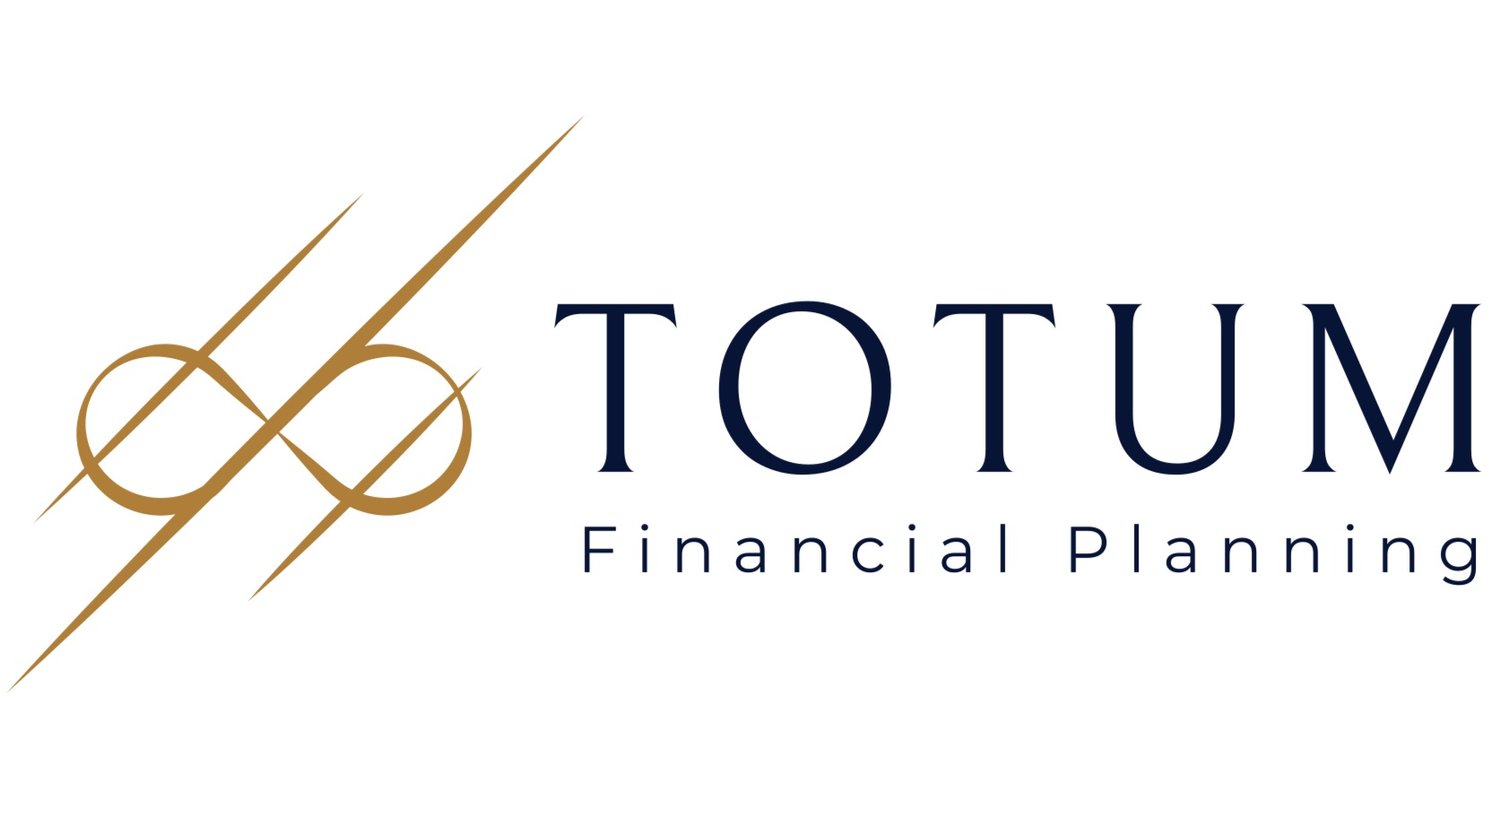 Totum Financial Planning